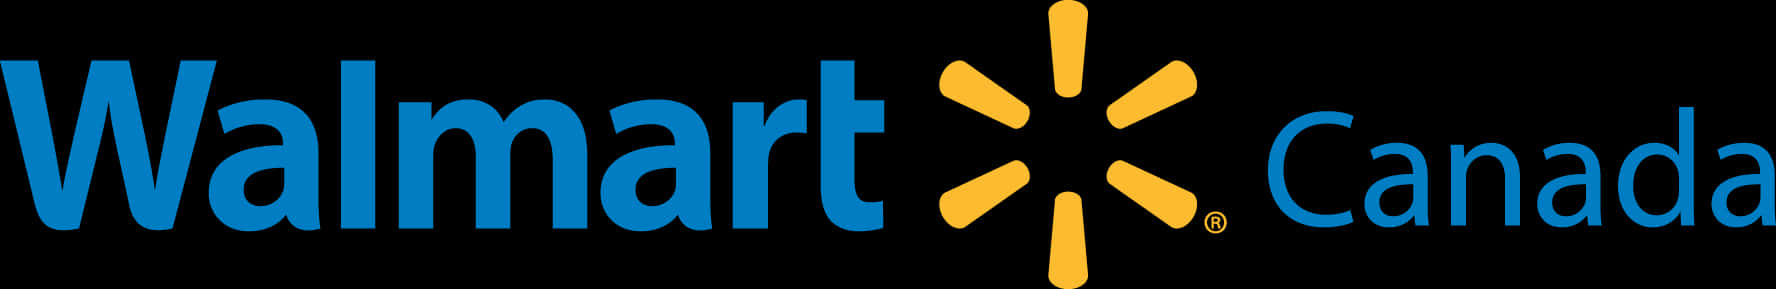 Walmart Canada Logo PNG